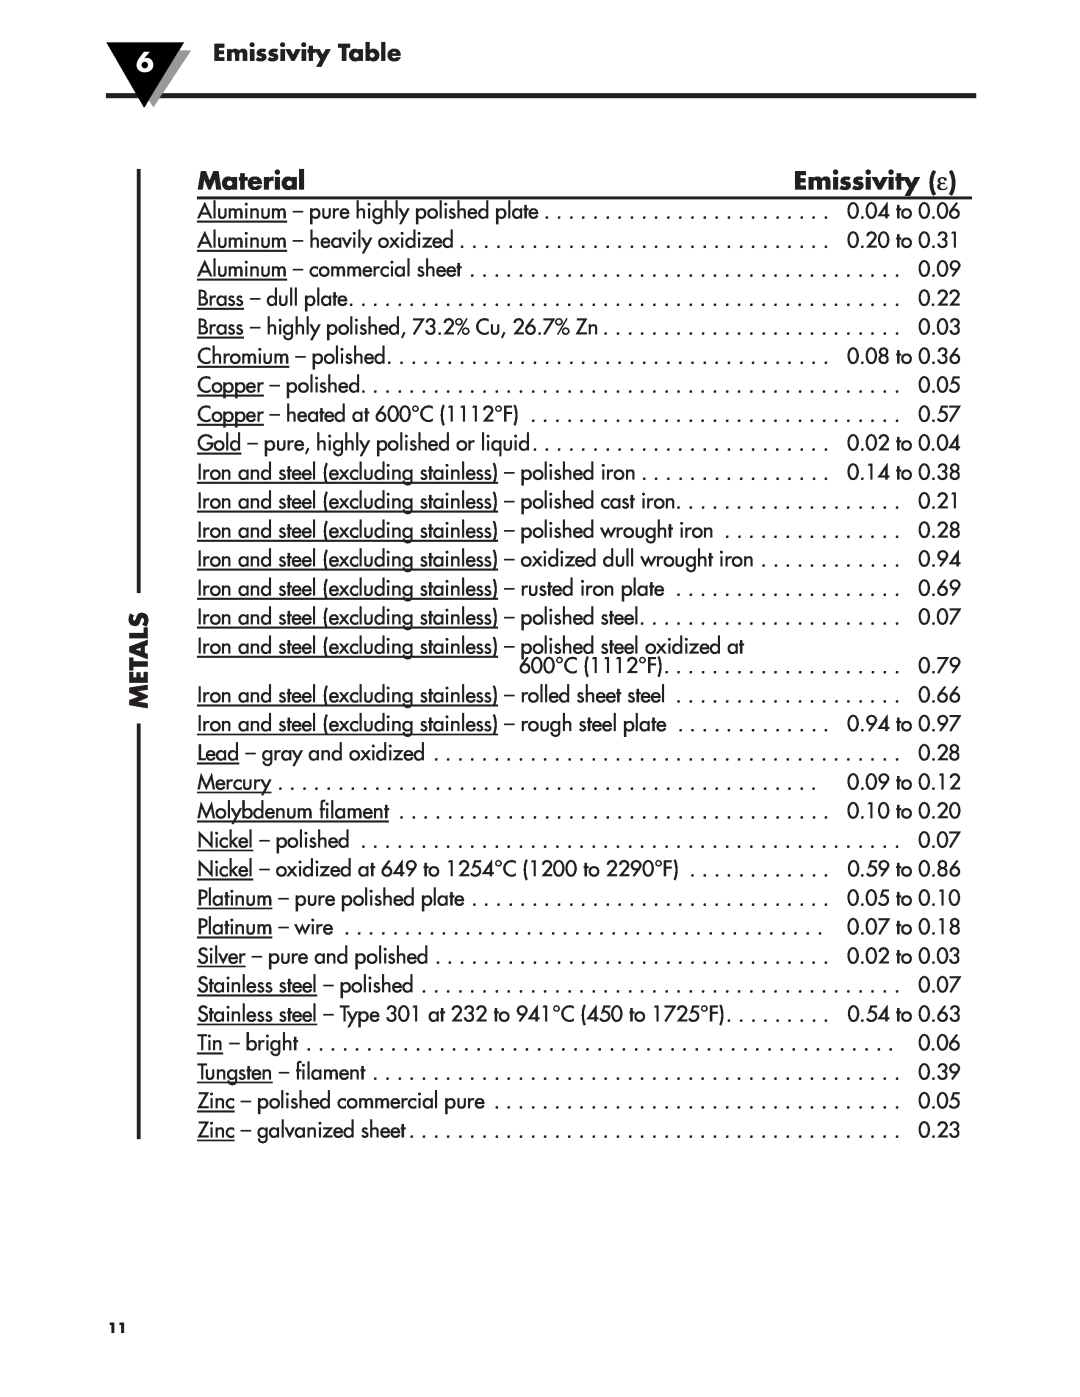 Omega OS137 manual Metals, Material, Emissivity ε, 6Emissivity Table 